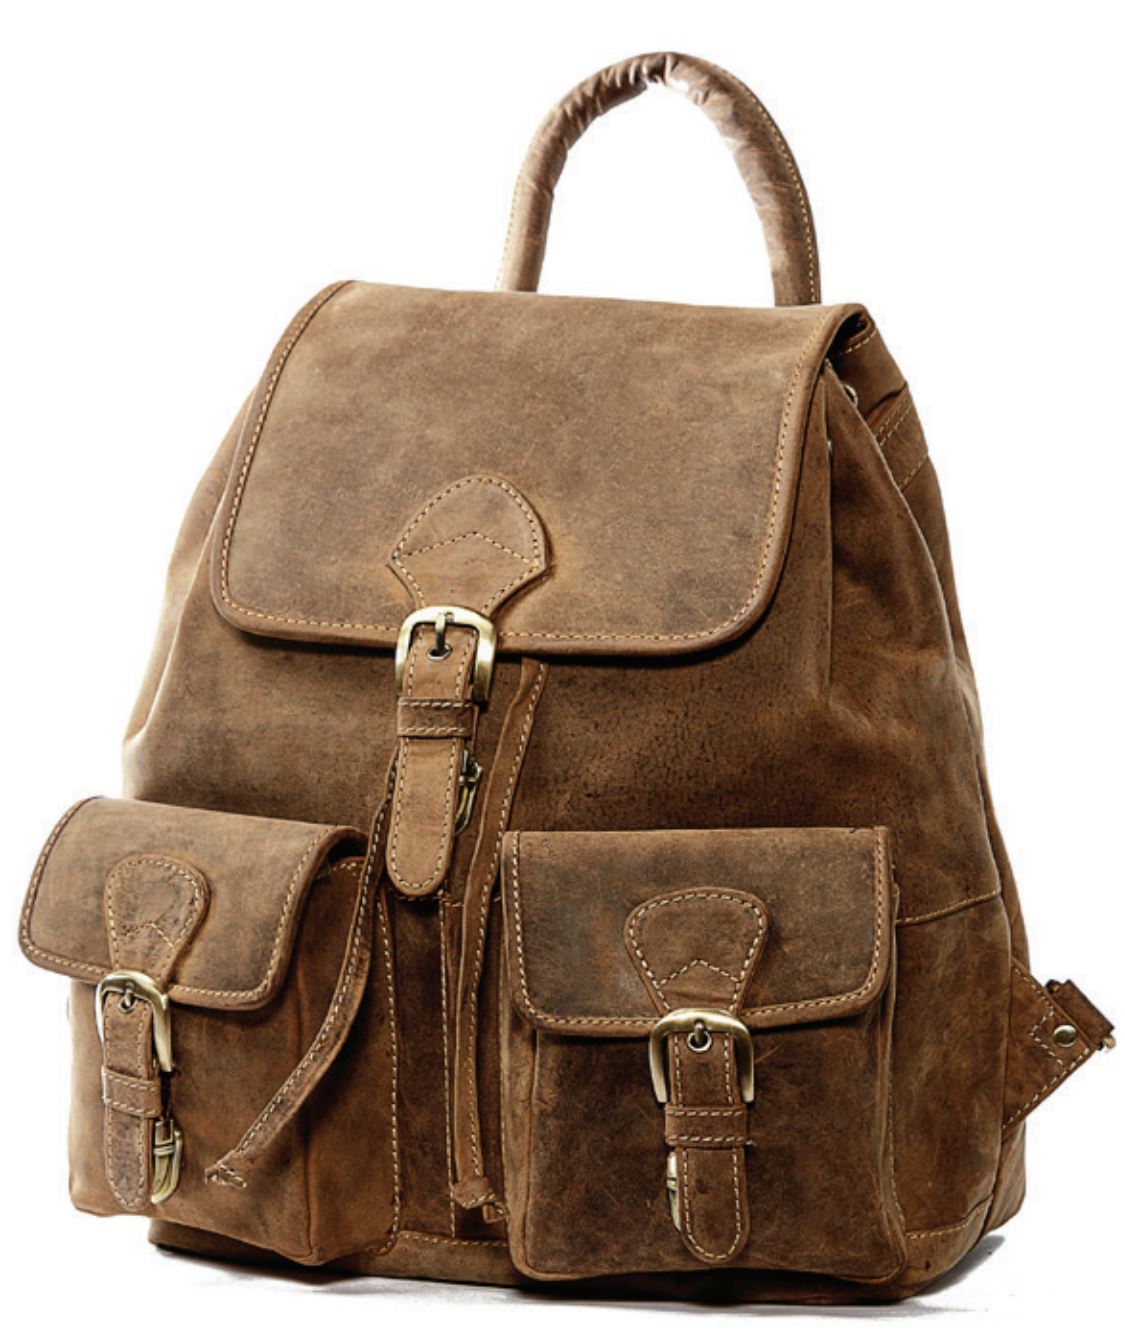 KOGOOR BACKPACK Bags & Leather > Backpack